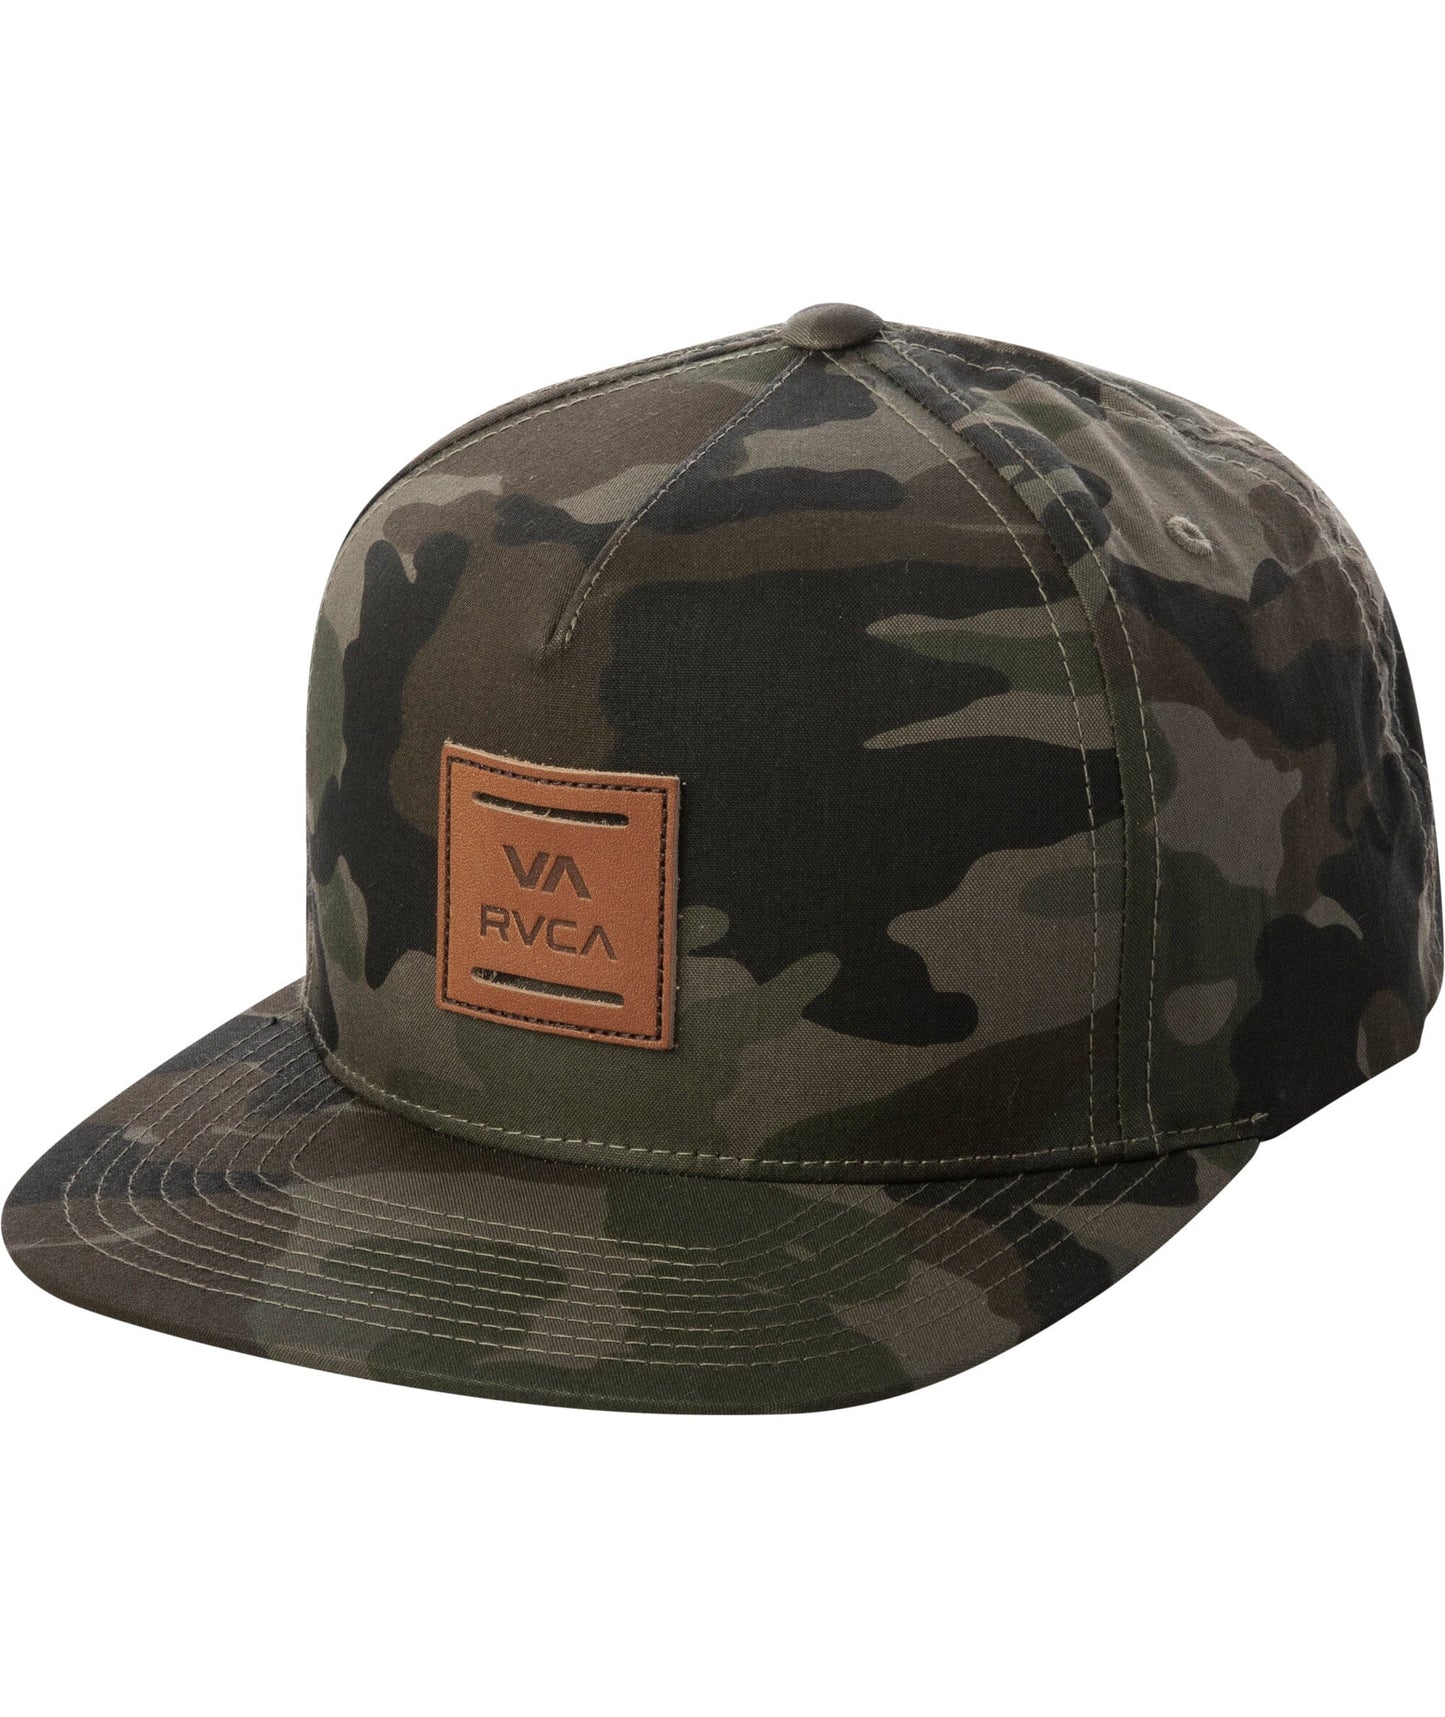 RVCA VA All The Way Snapback Hat